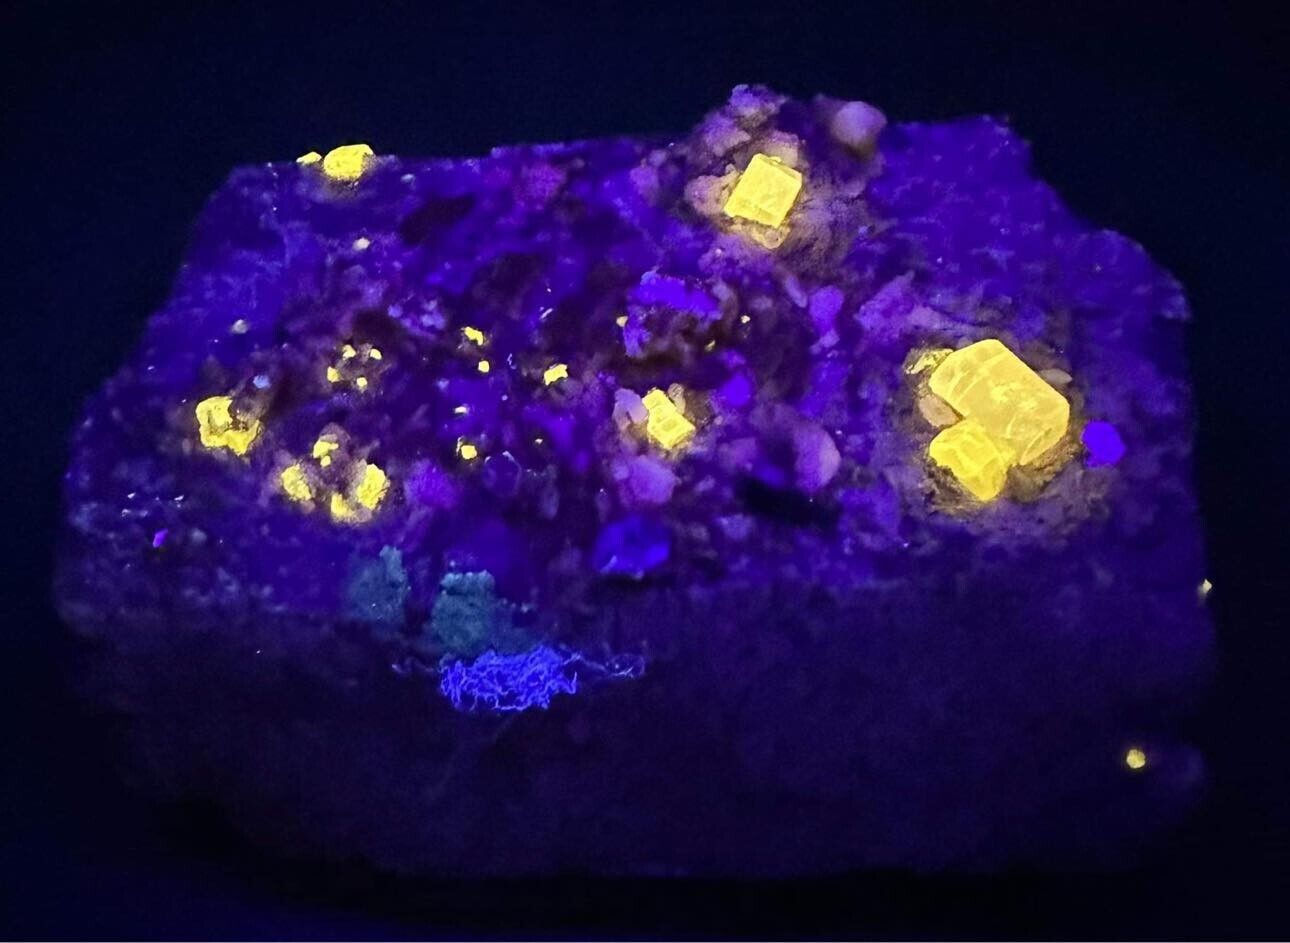 300 GM Rare Fluorescent Pinkish Apatite & Tourmaline Crystals On Feldspar Matrix